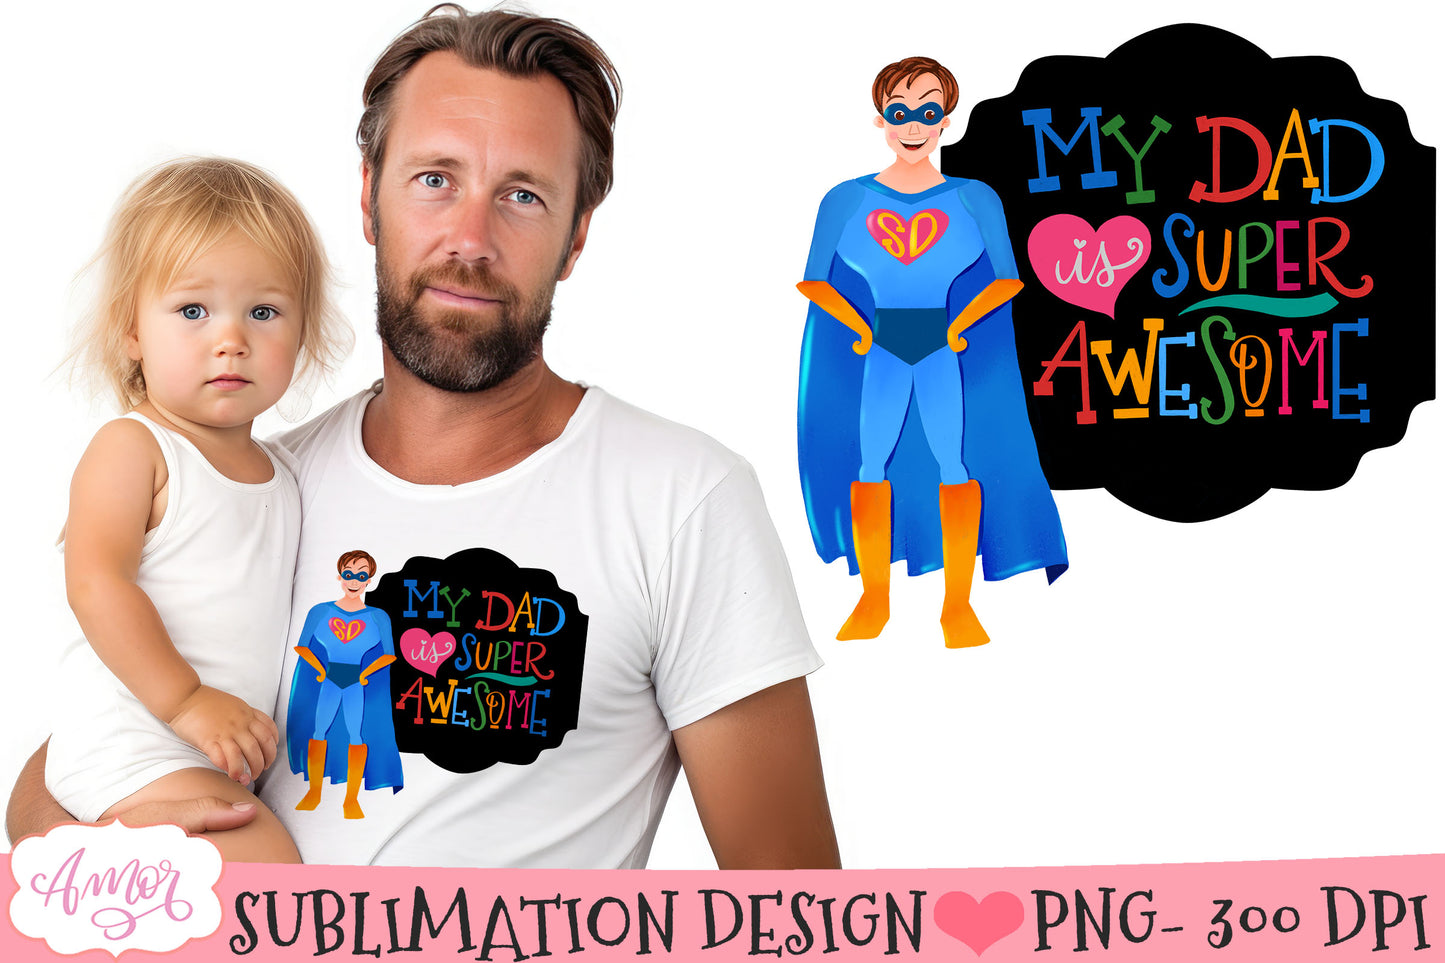 Super Dad sublimation designs for Father's Day BUNDLE